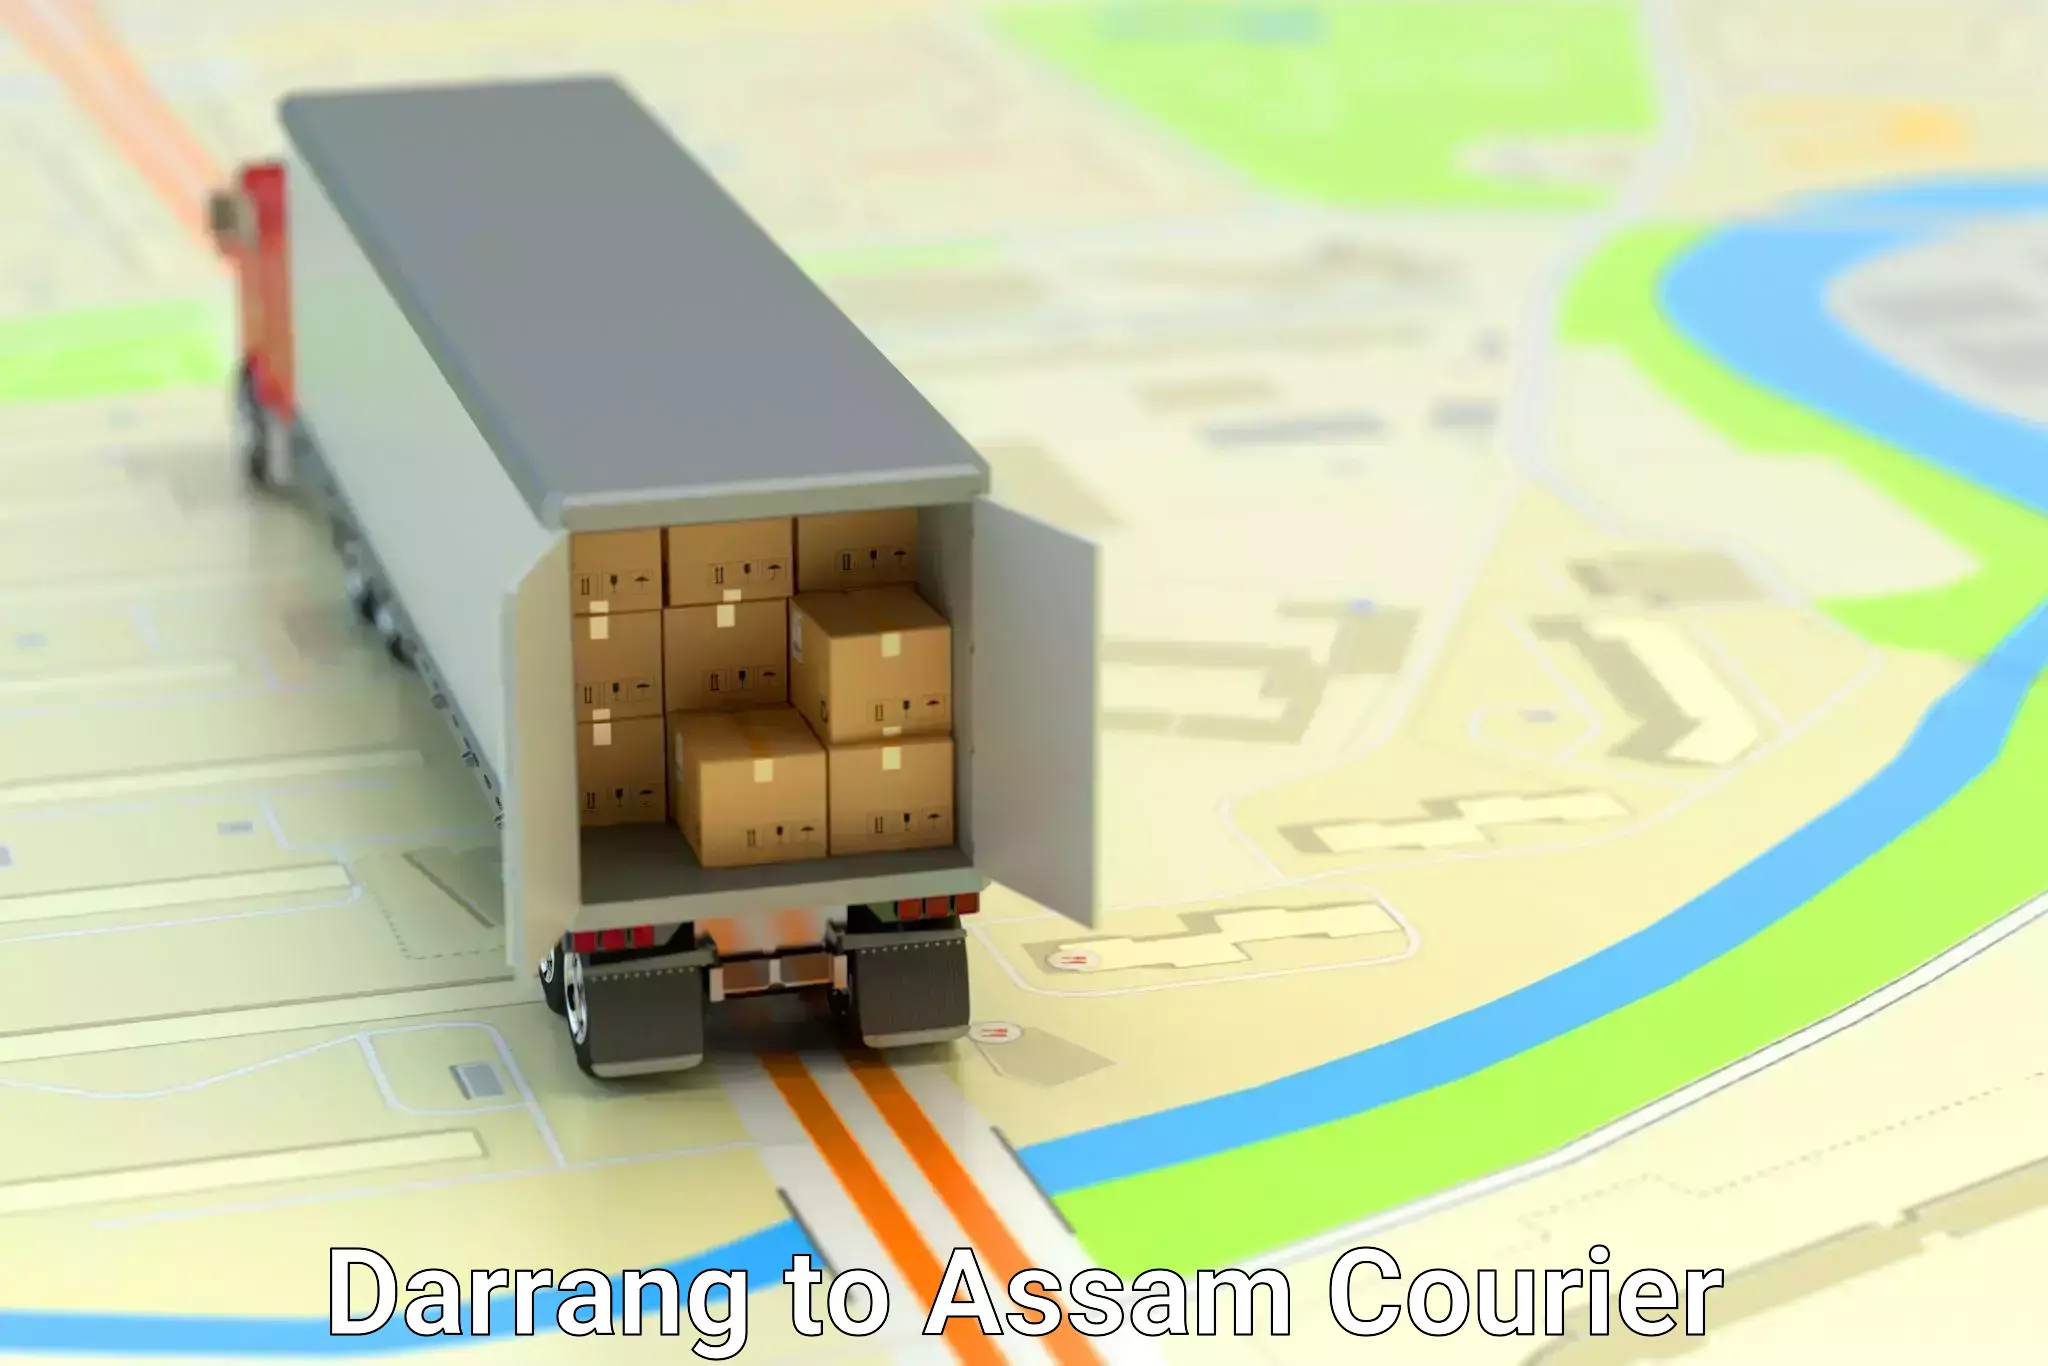 Advanced shipping technology Darrang to Darrang